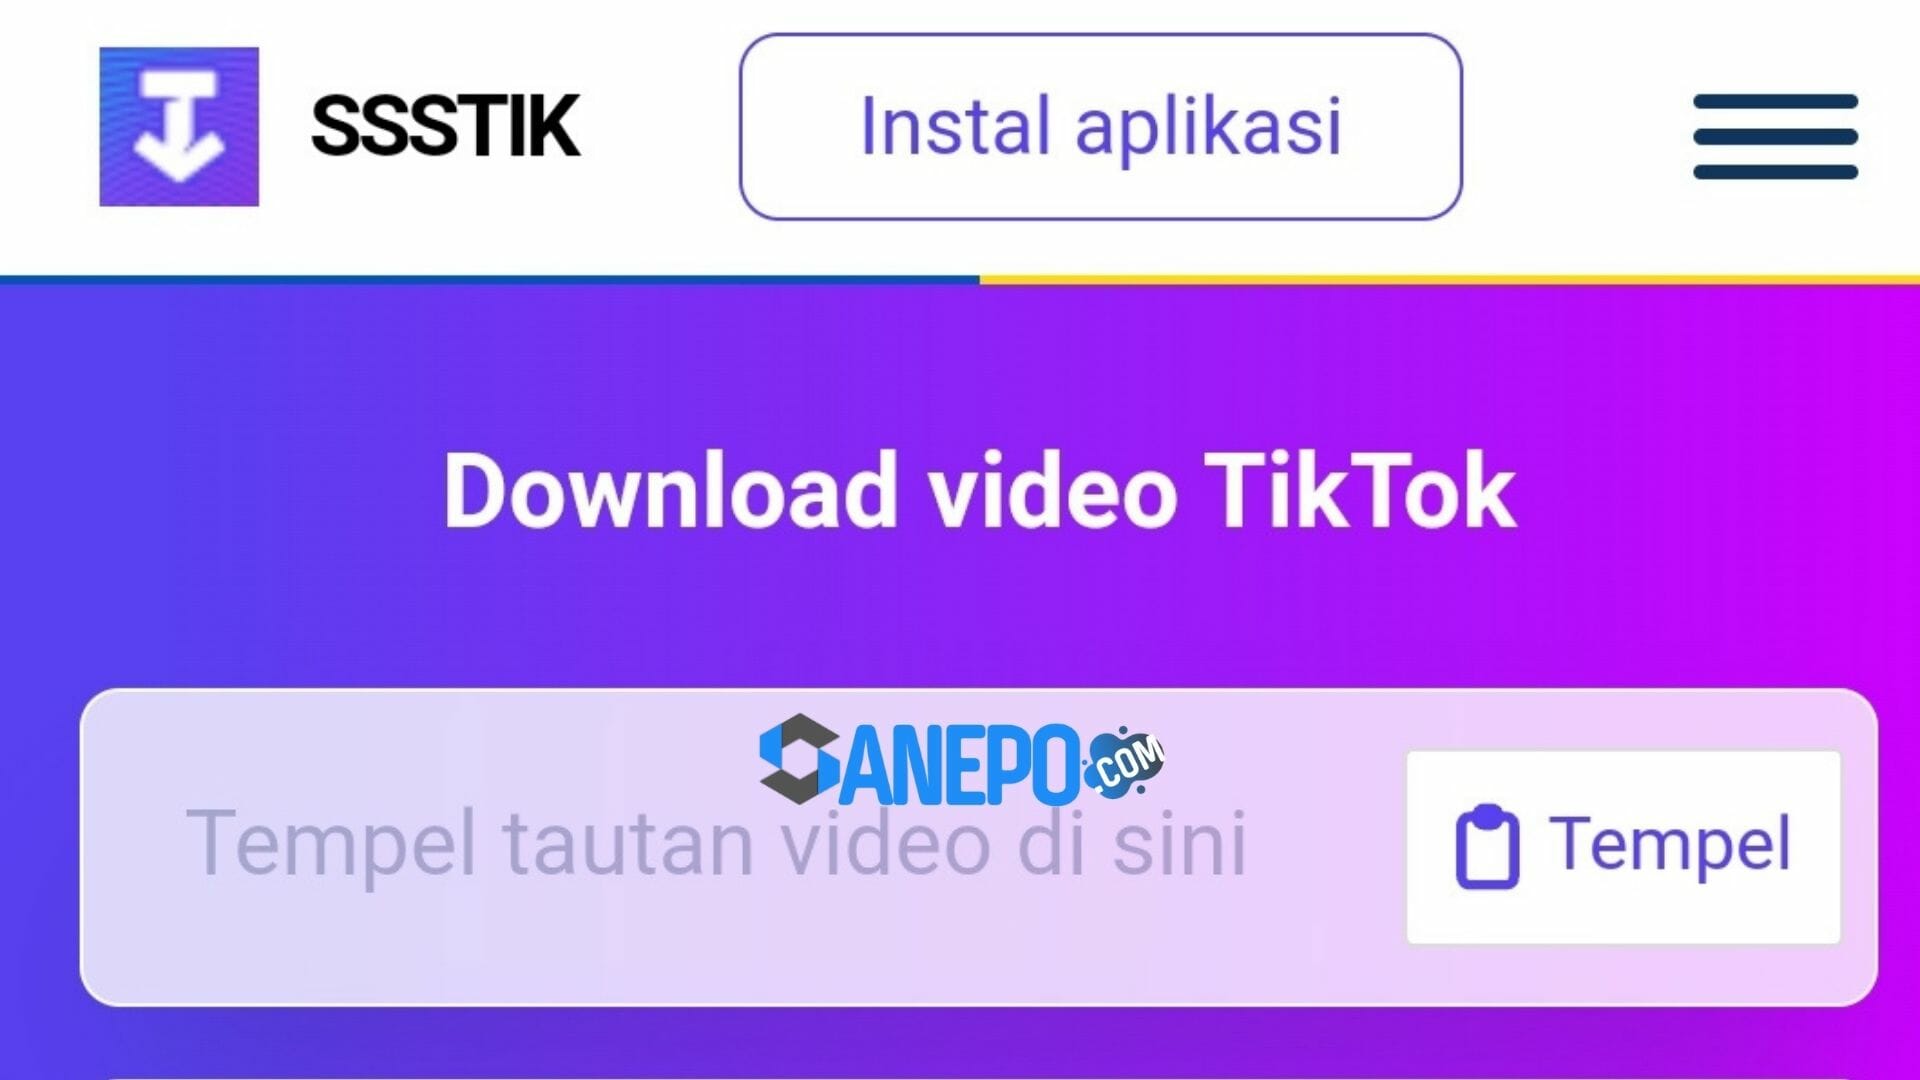 Ssstiktok io download video tiktok tanpa watermark